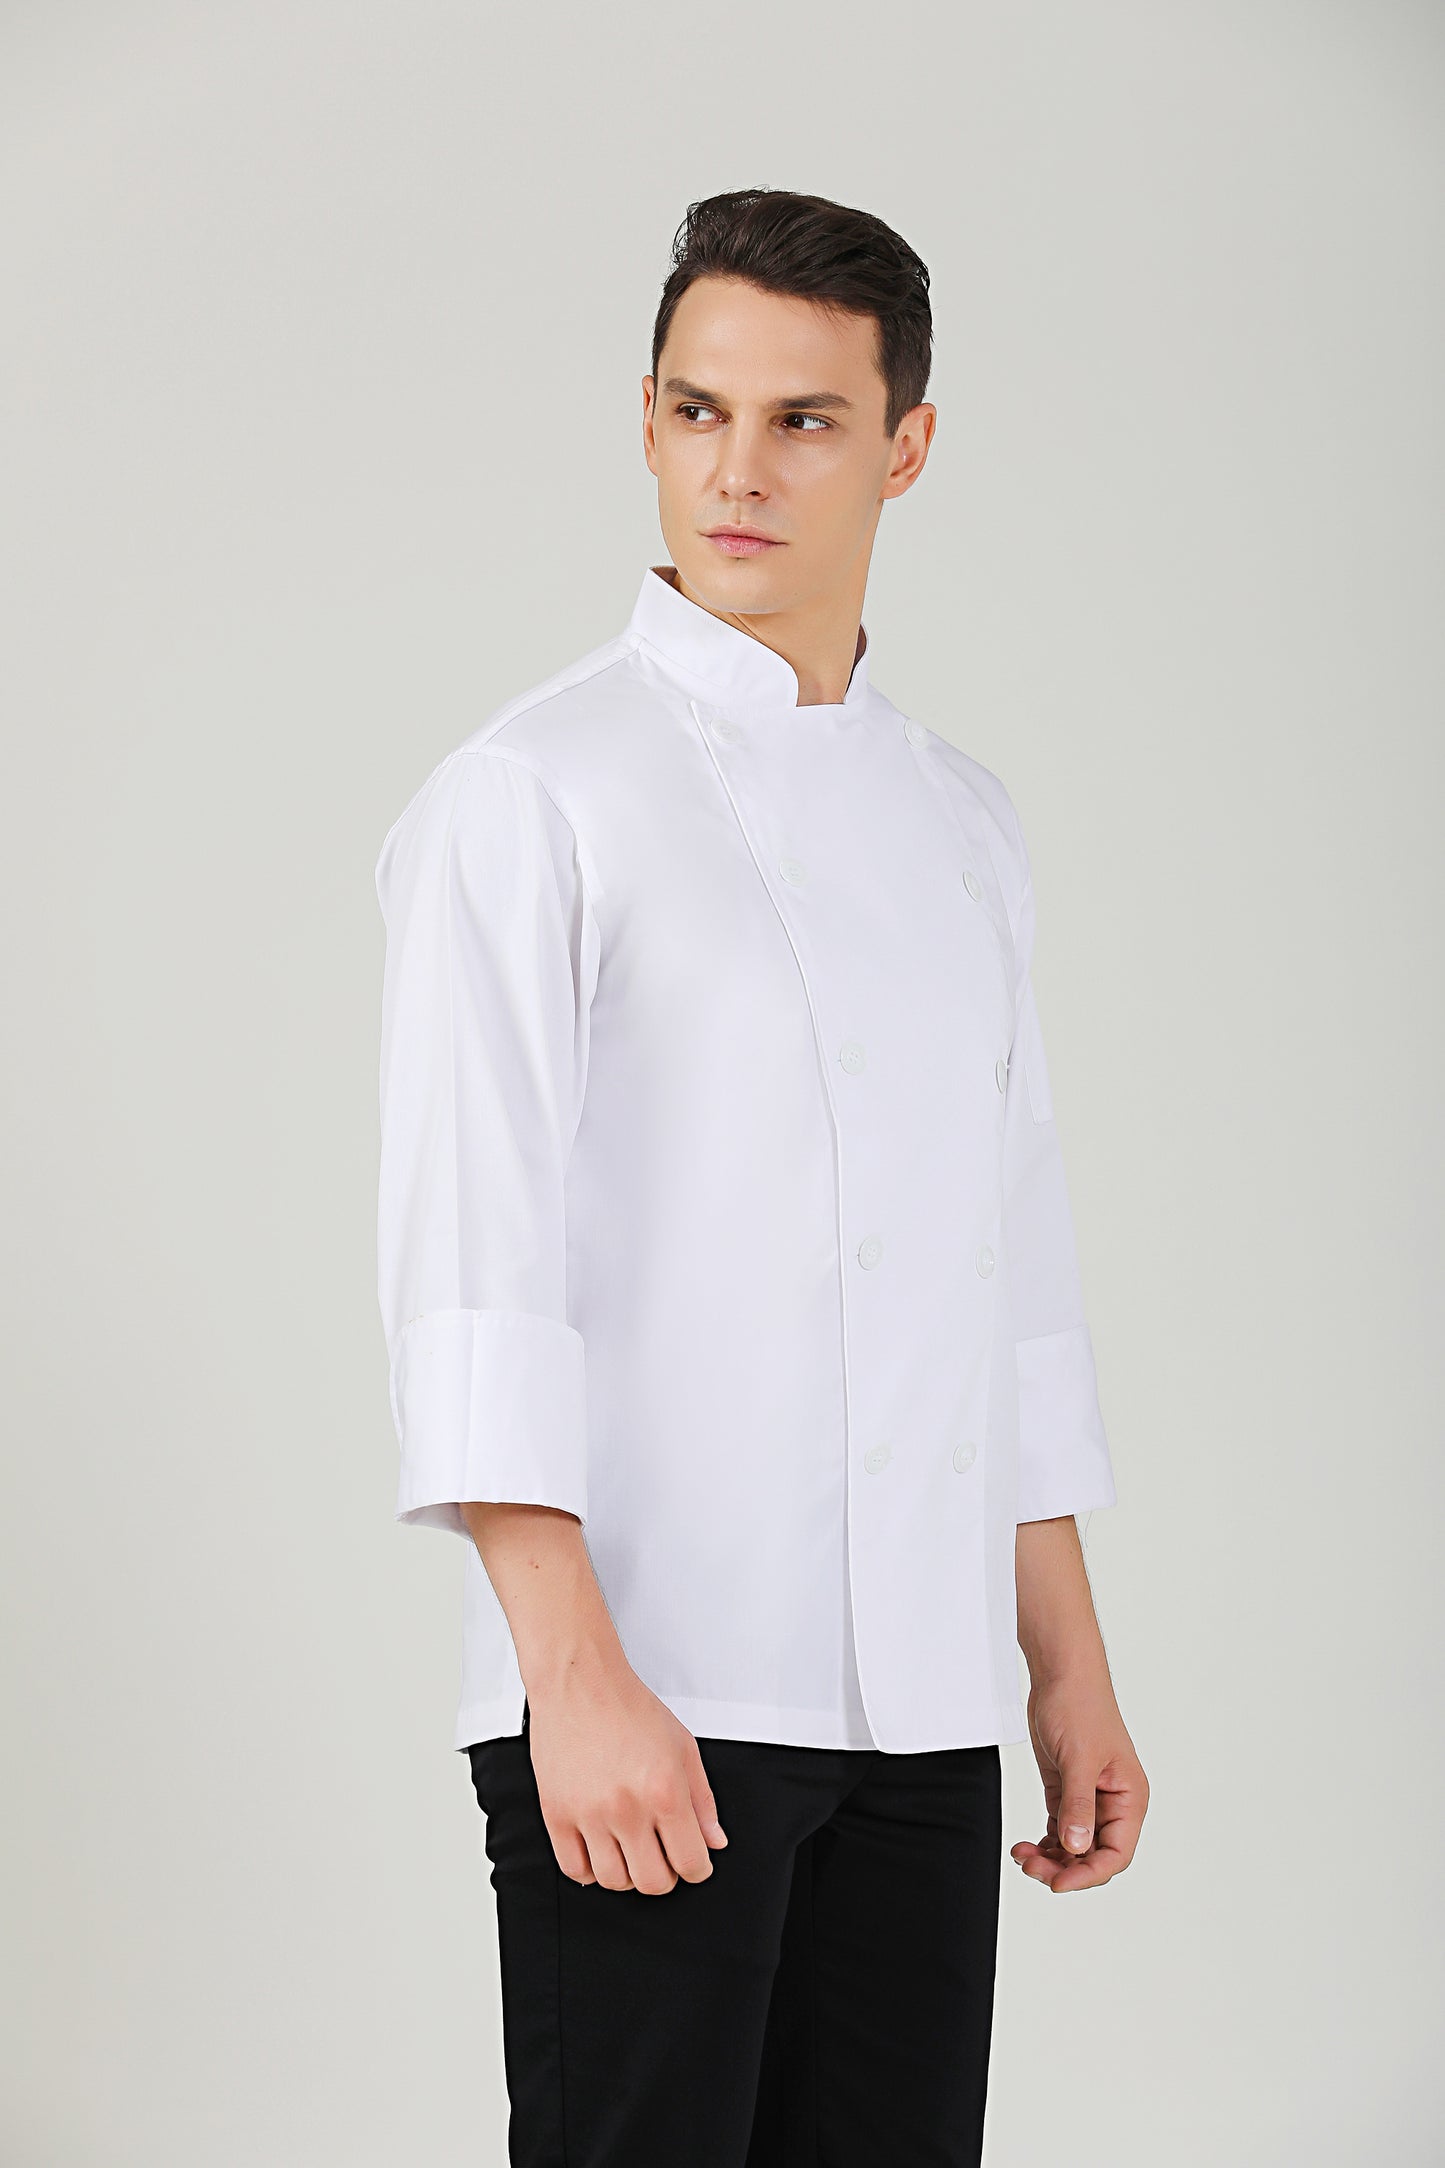 Classic White Chef Jacket, Long Sleeve